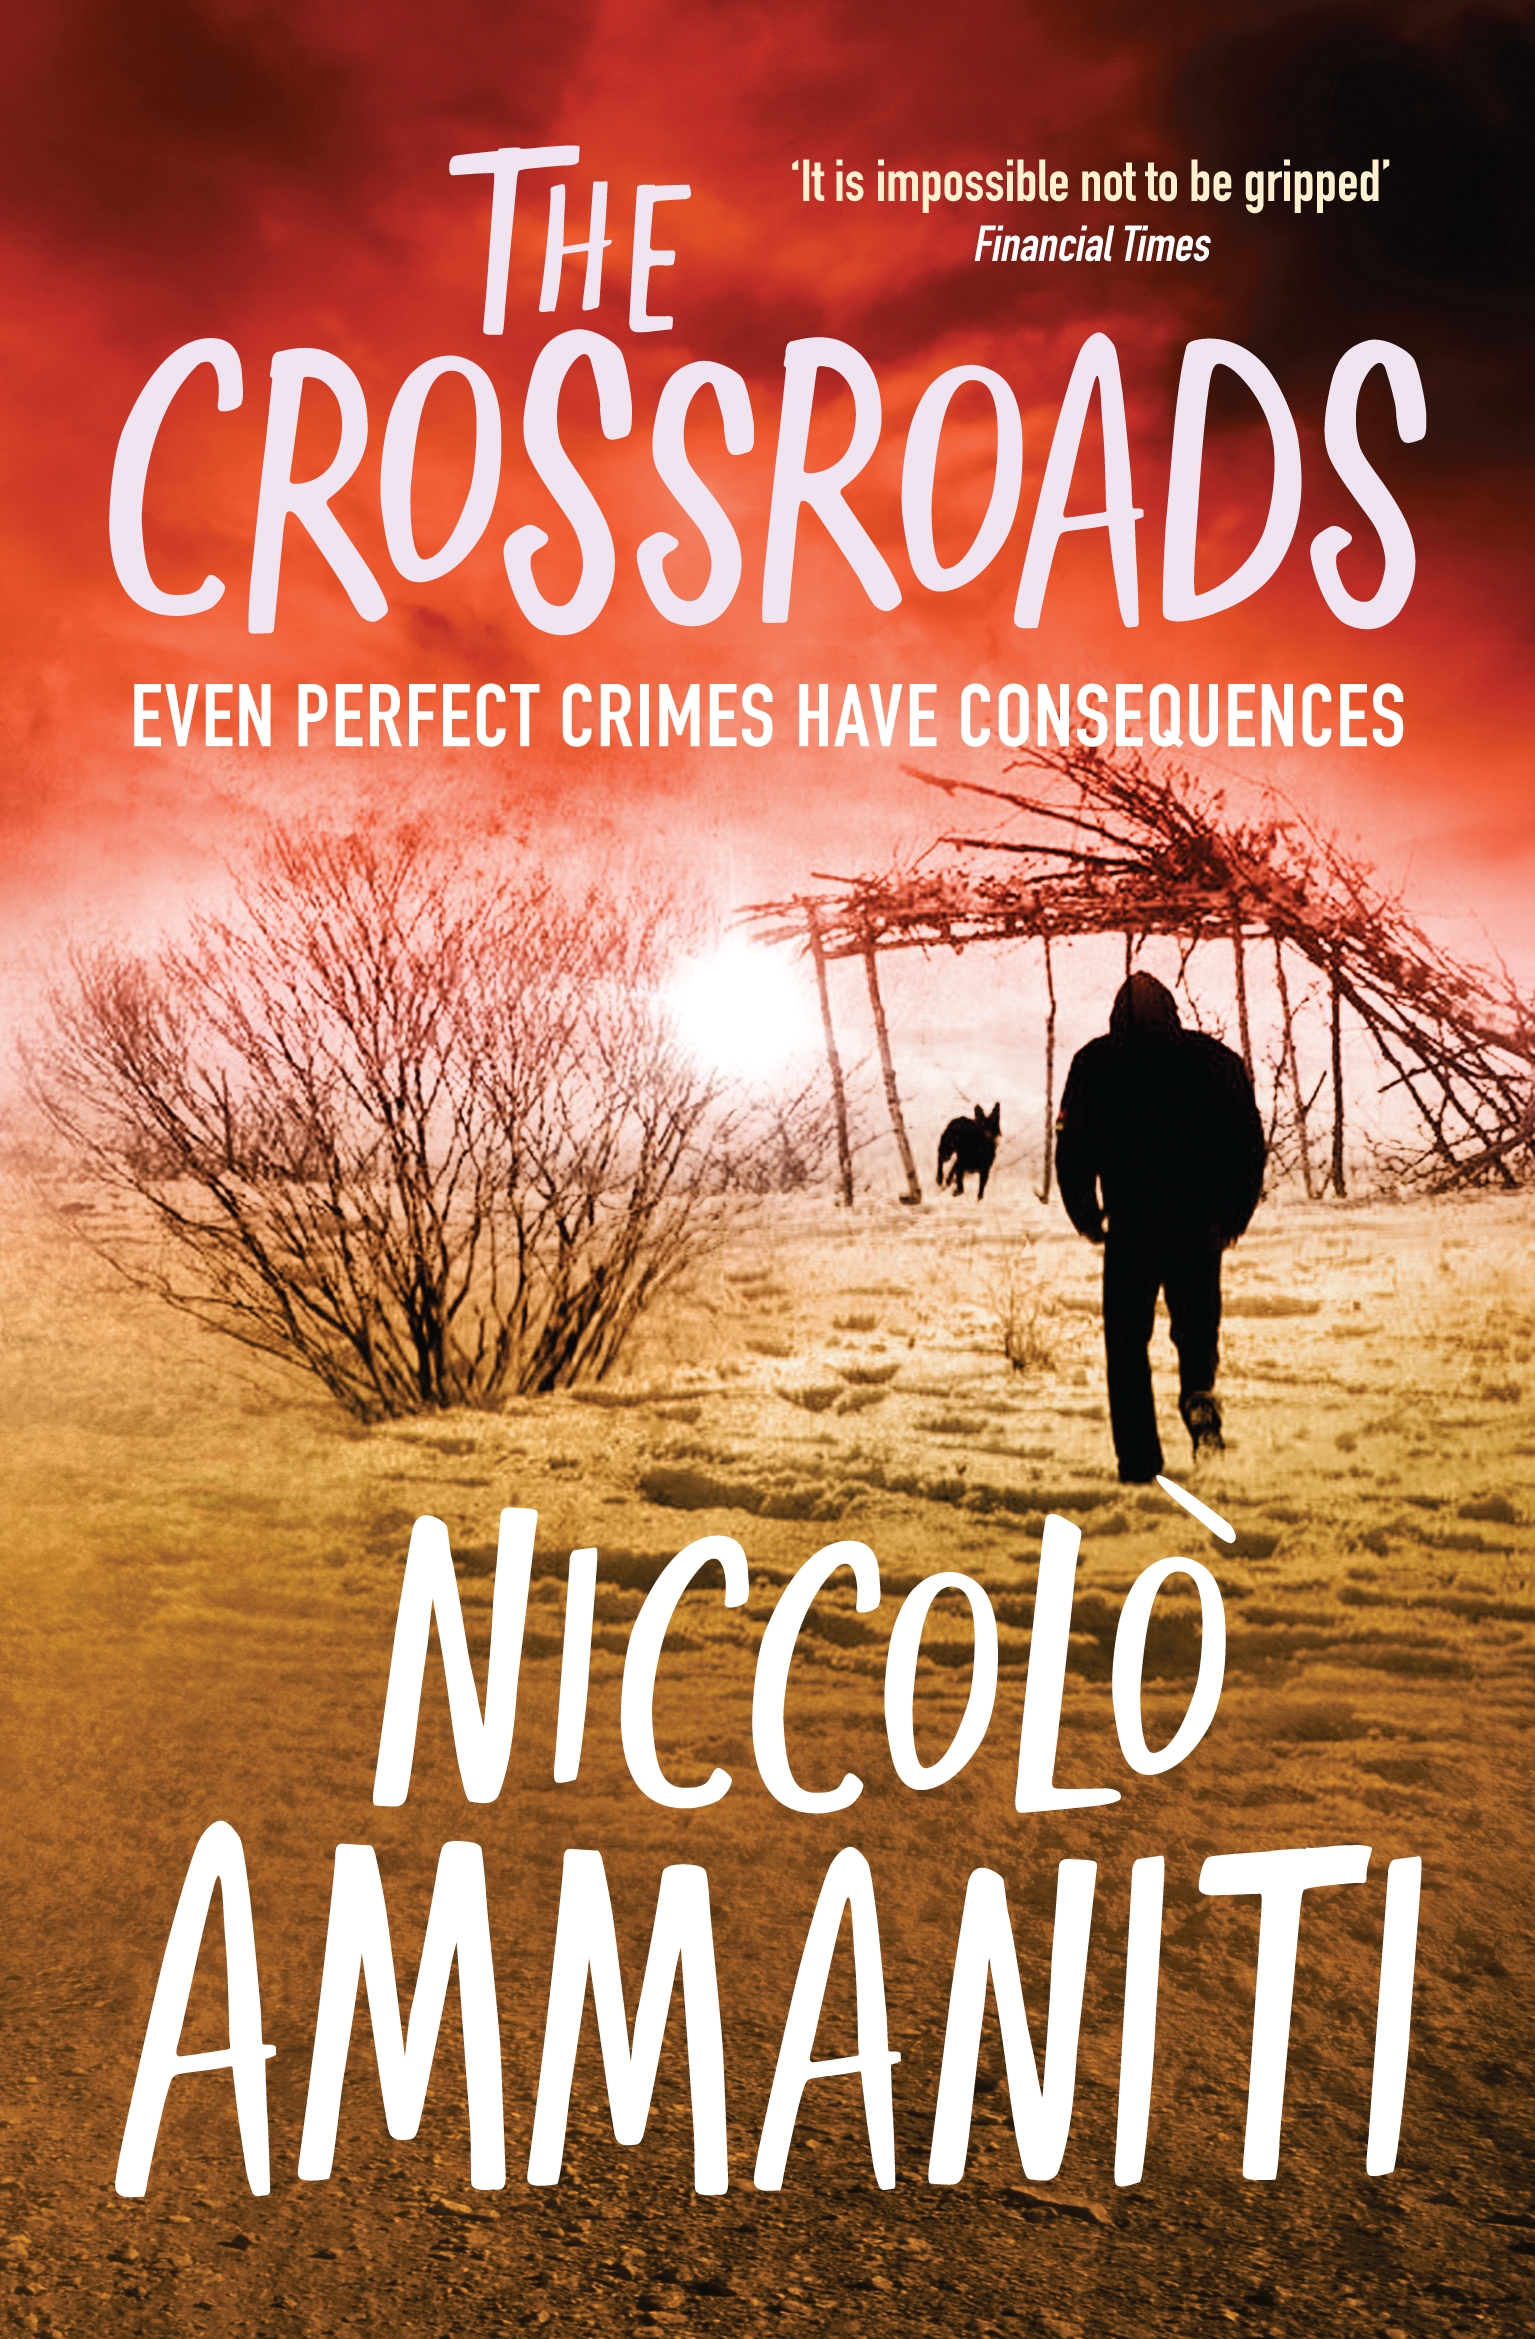 The Crossroads by Niccolò Ammaniti – Canongate Books